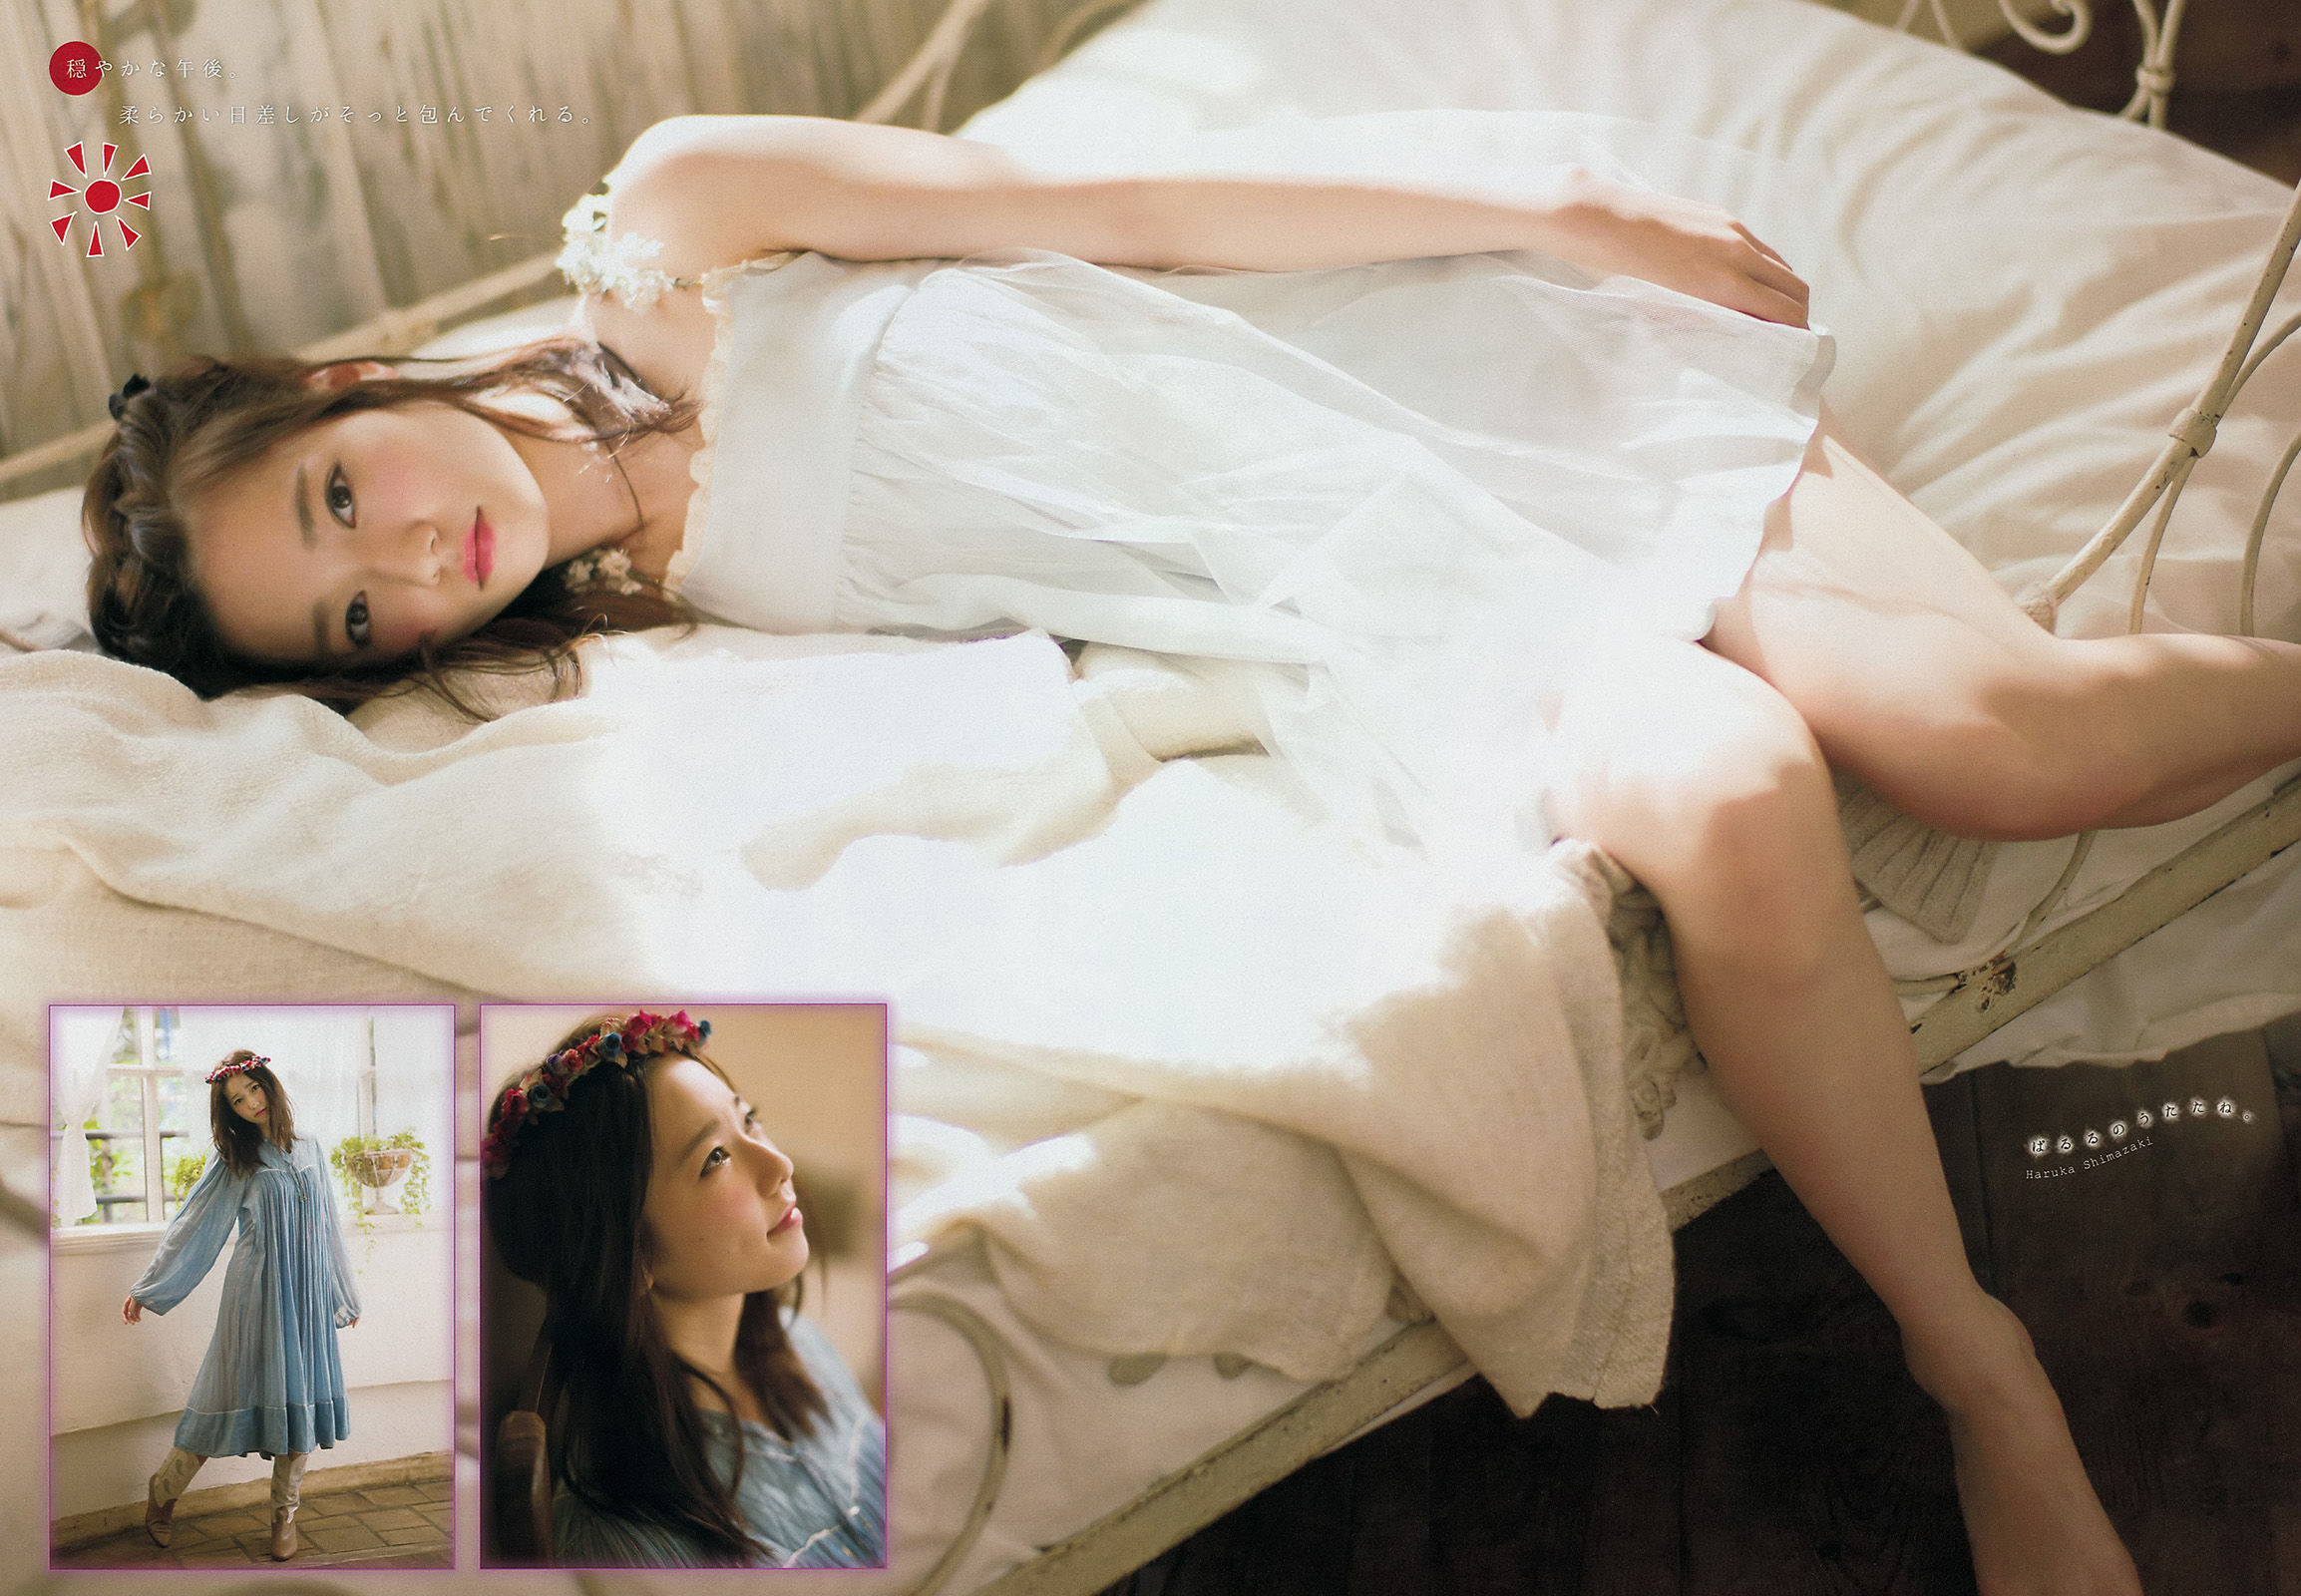 [Young Magazine] 2014年No.51 島崎遥香